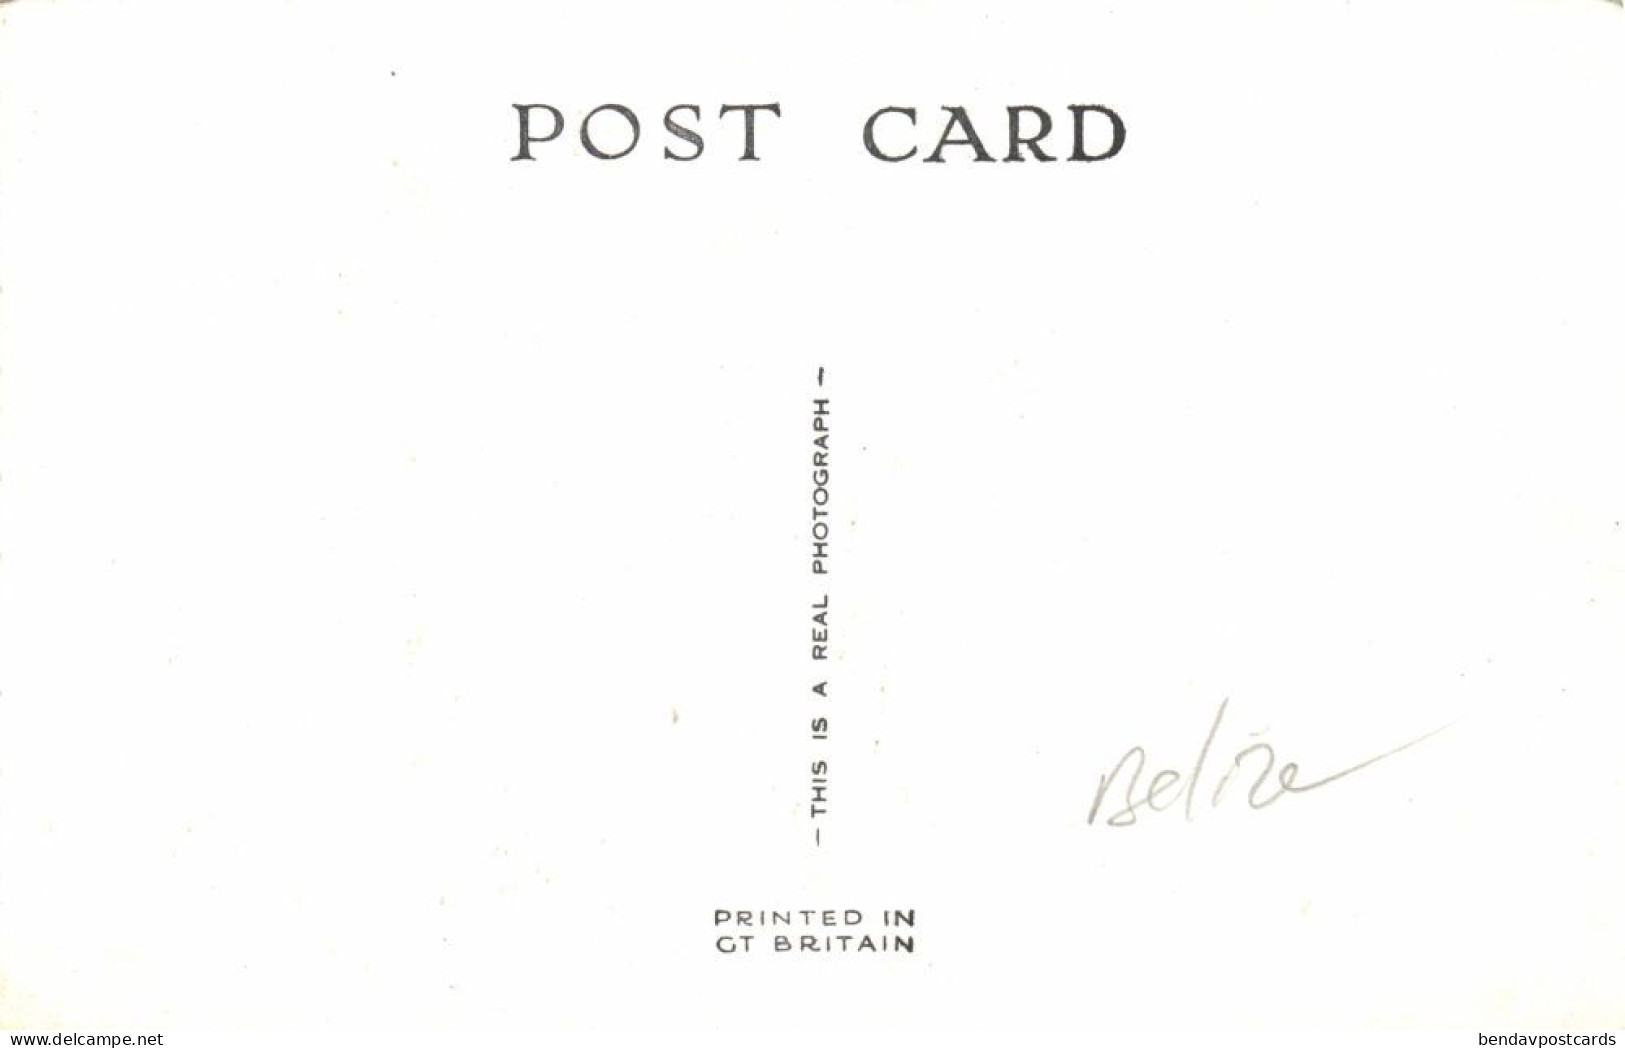 British Honduras, BELIZE, Rendezvous Caye, Palm Trees (1950s) RPPC Postcard - Belize